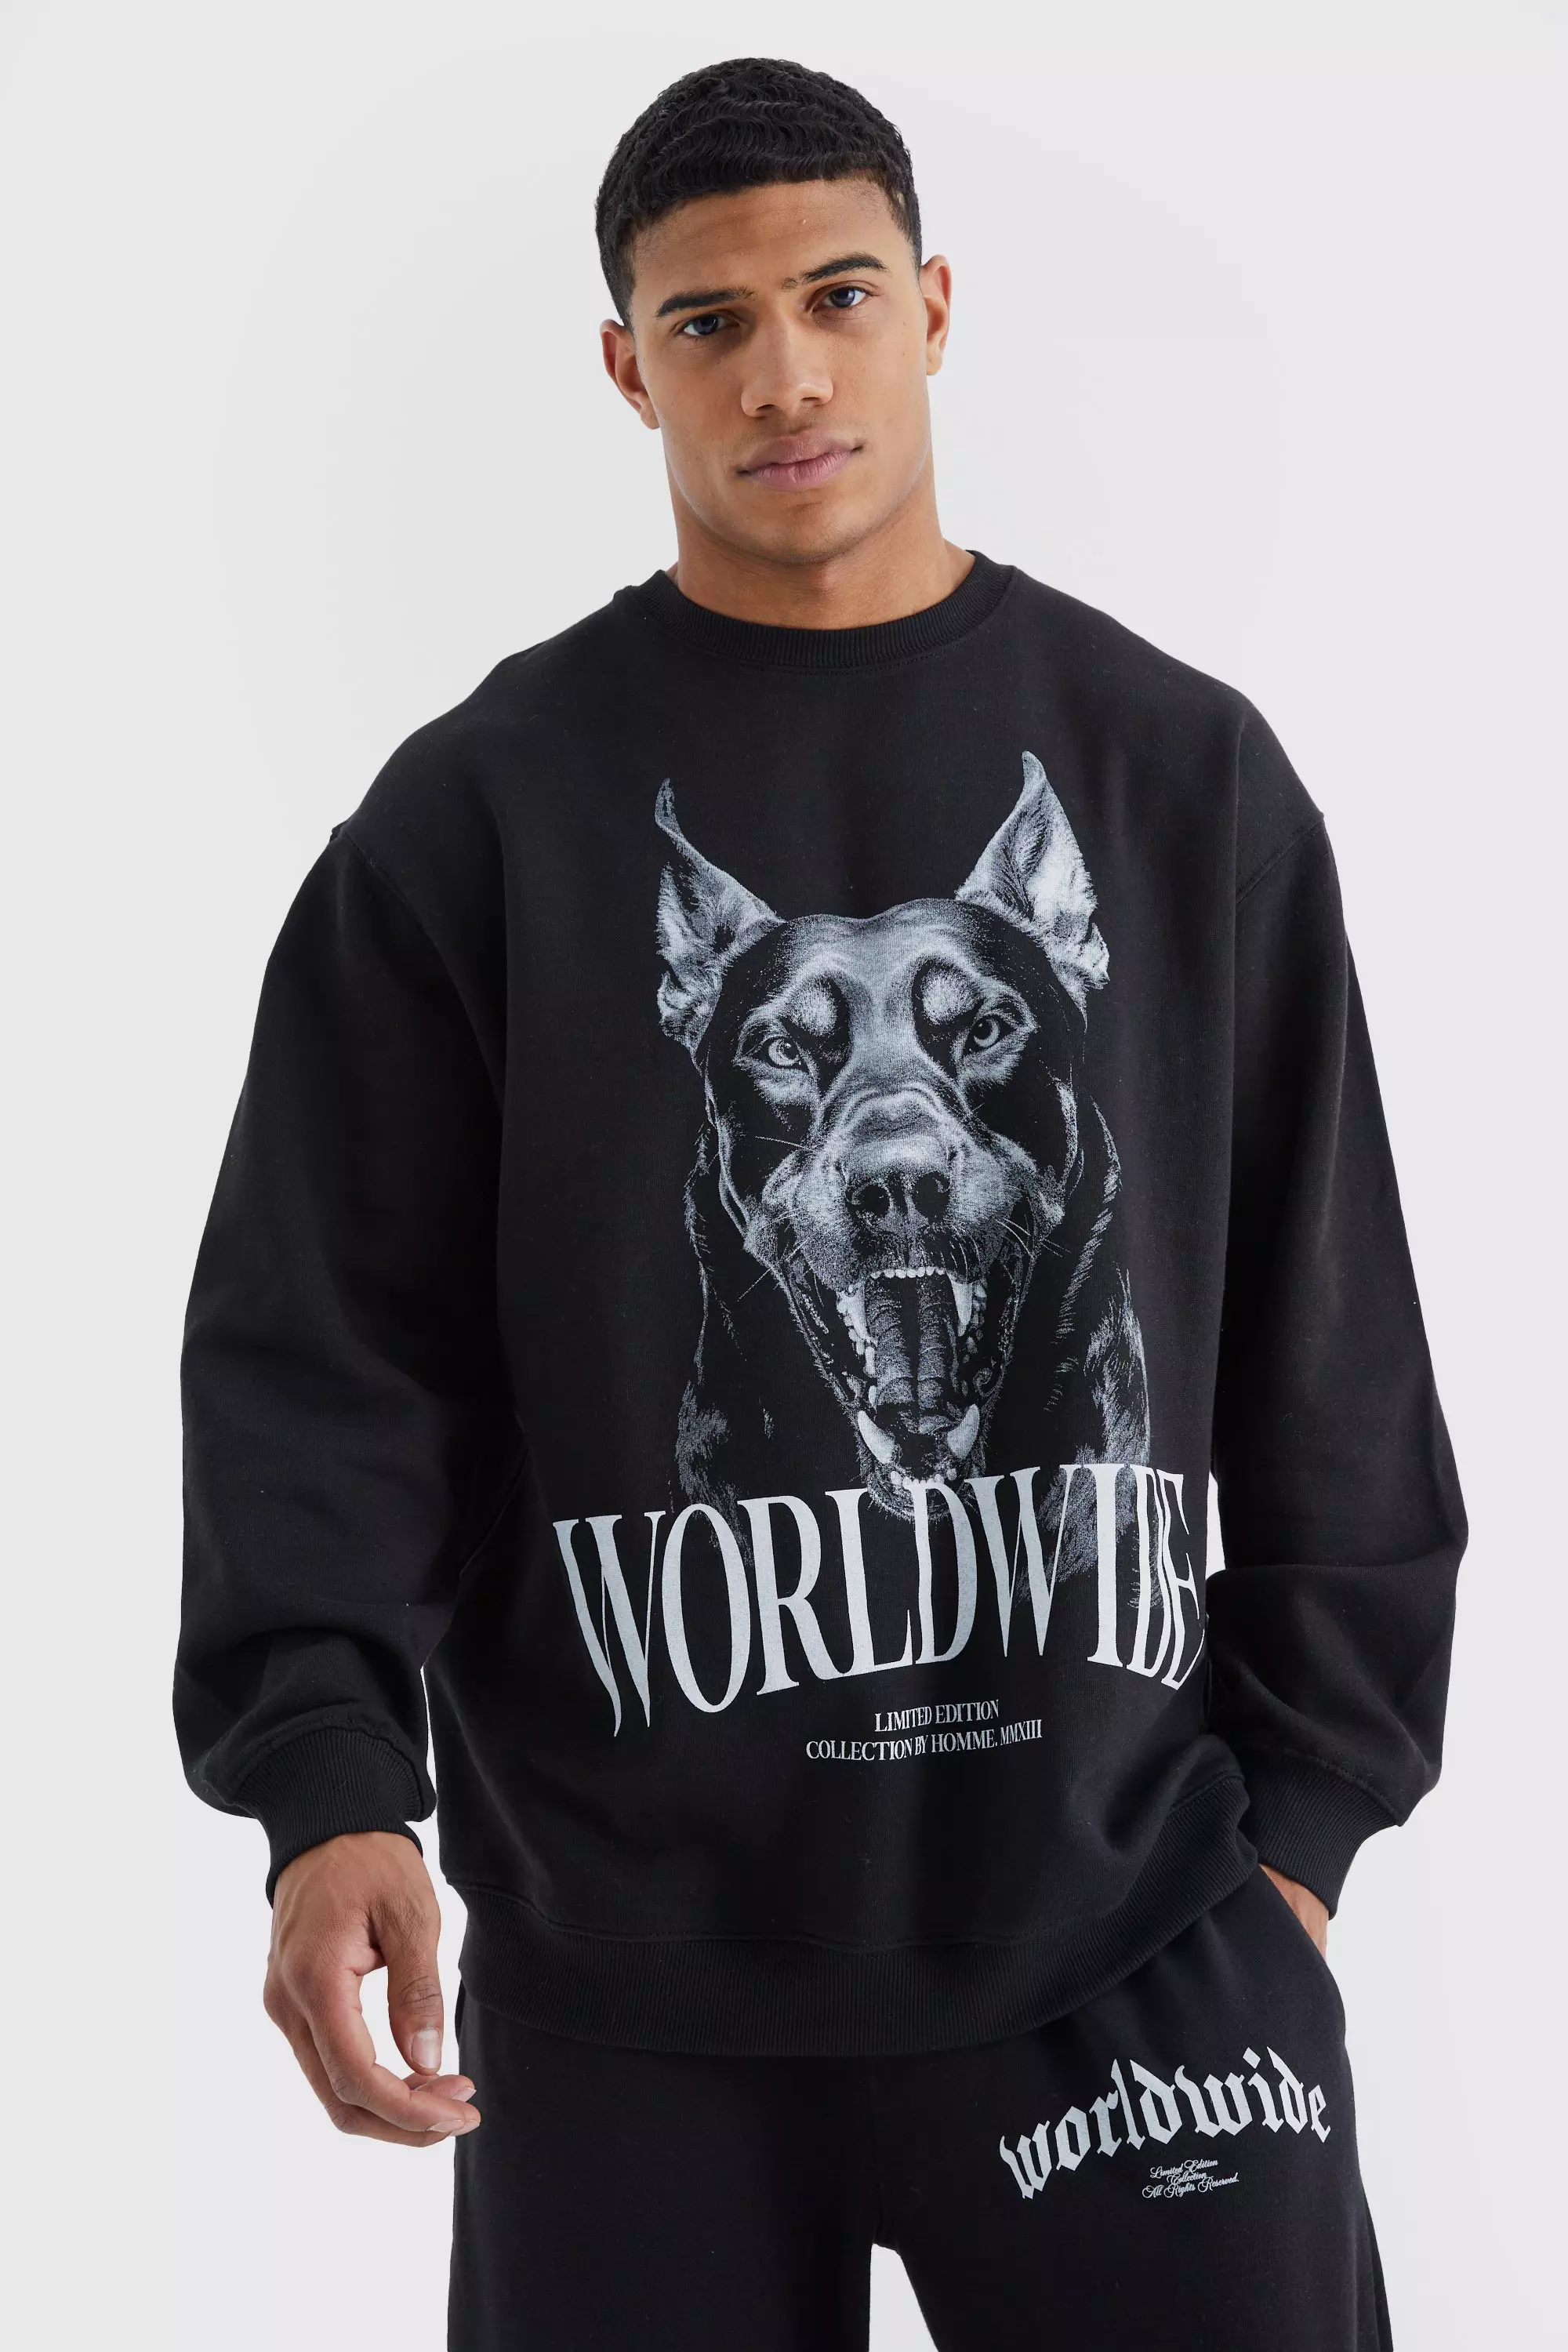 Worldwide Graphic Sweatshirt Black